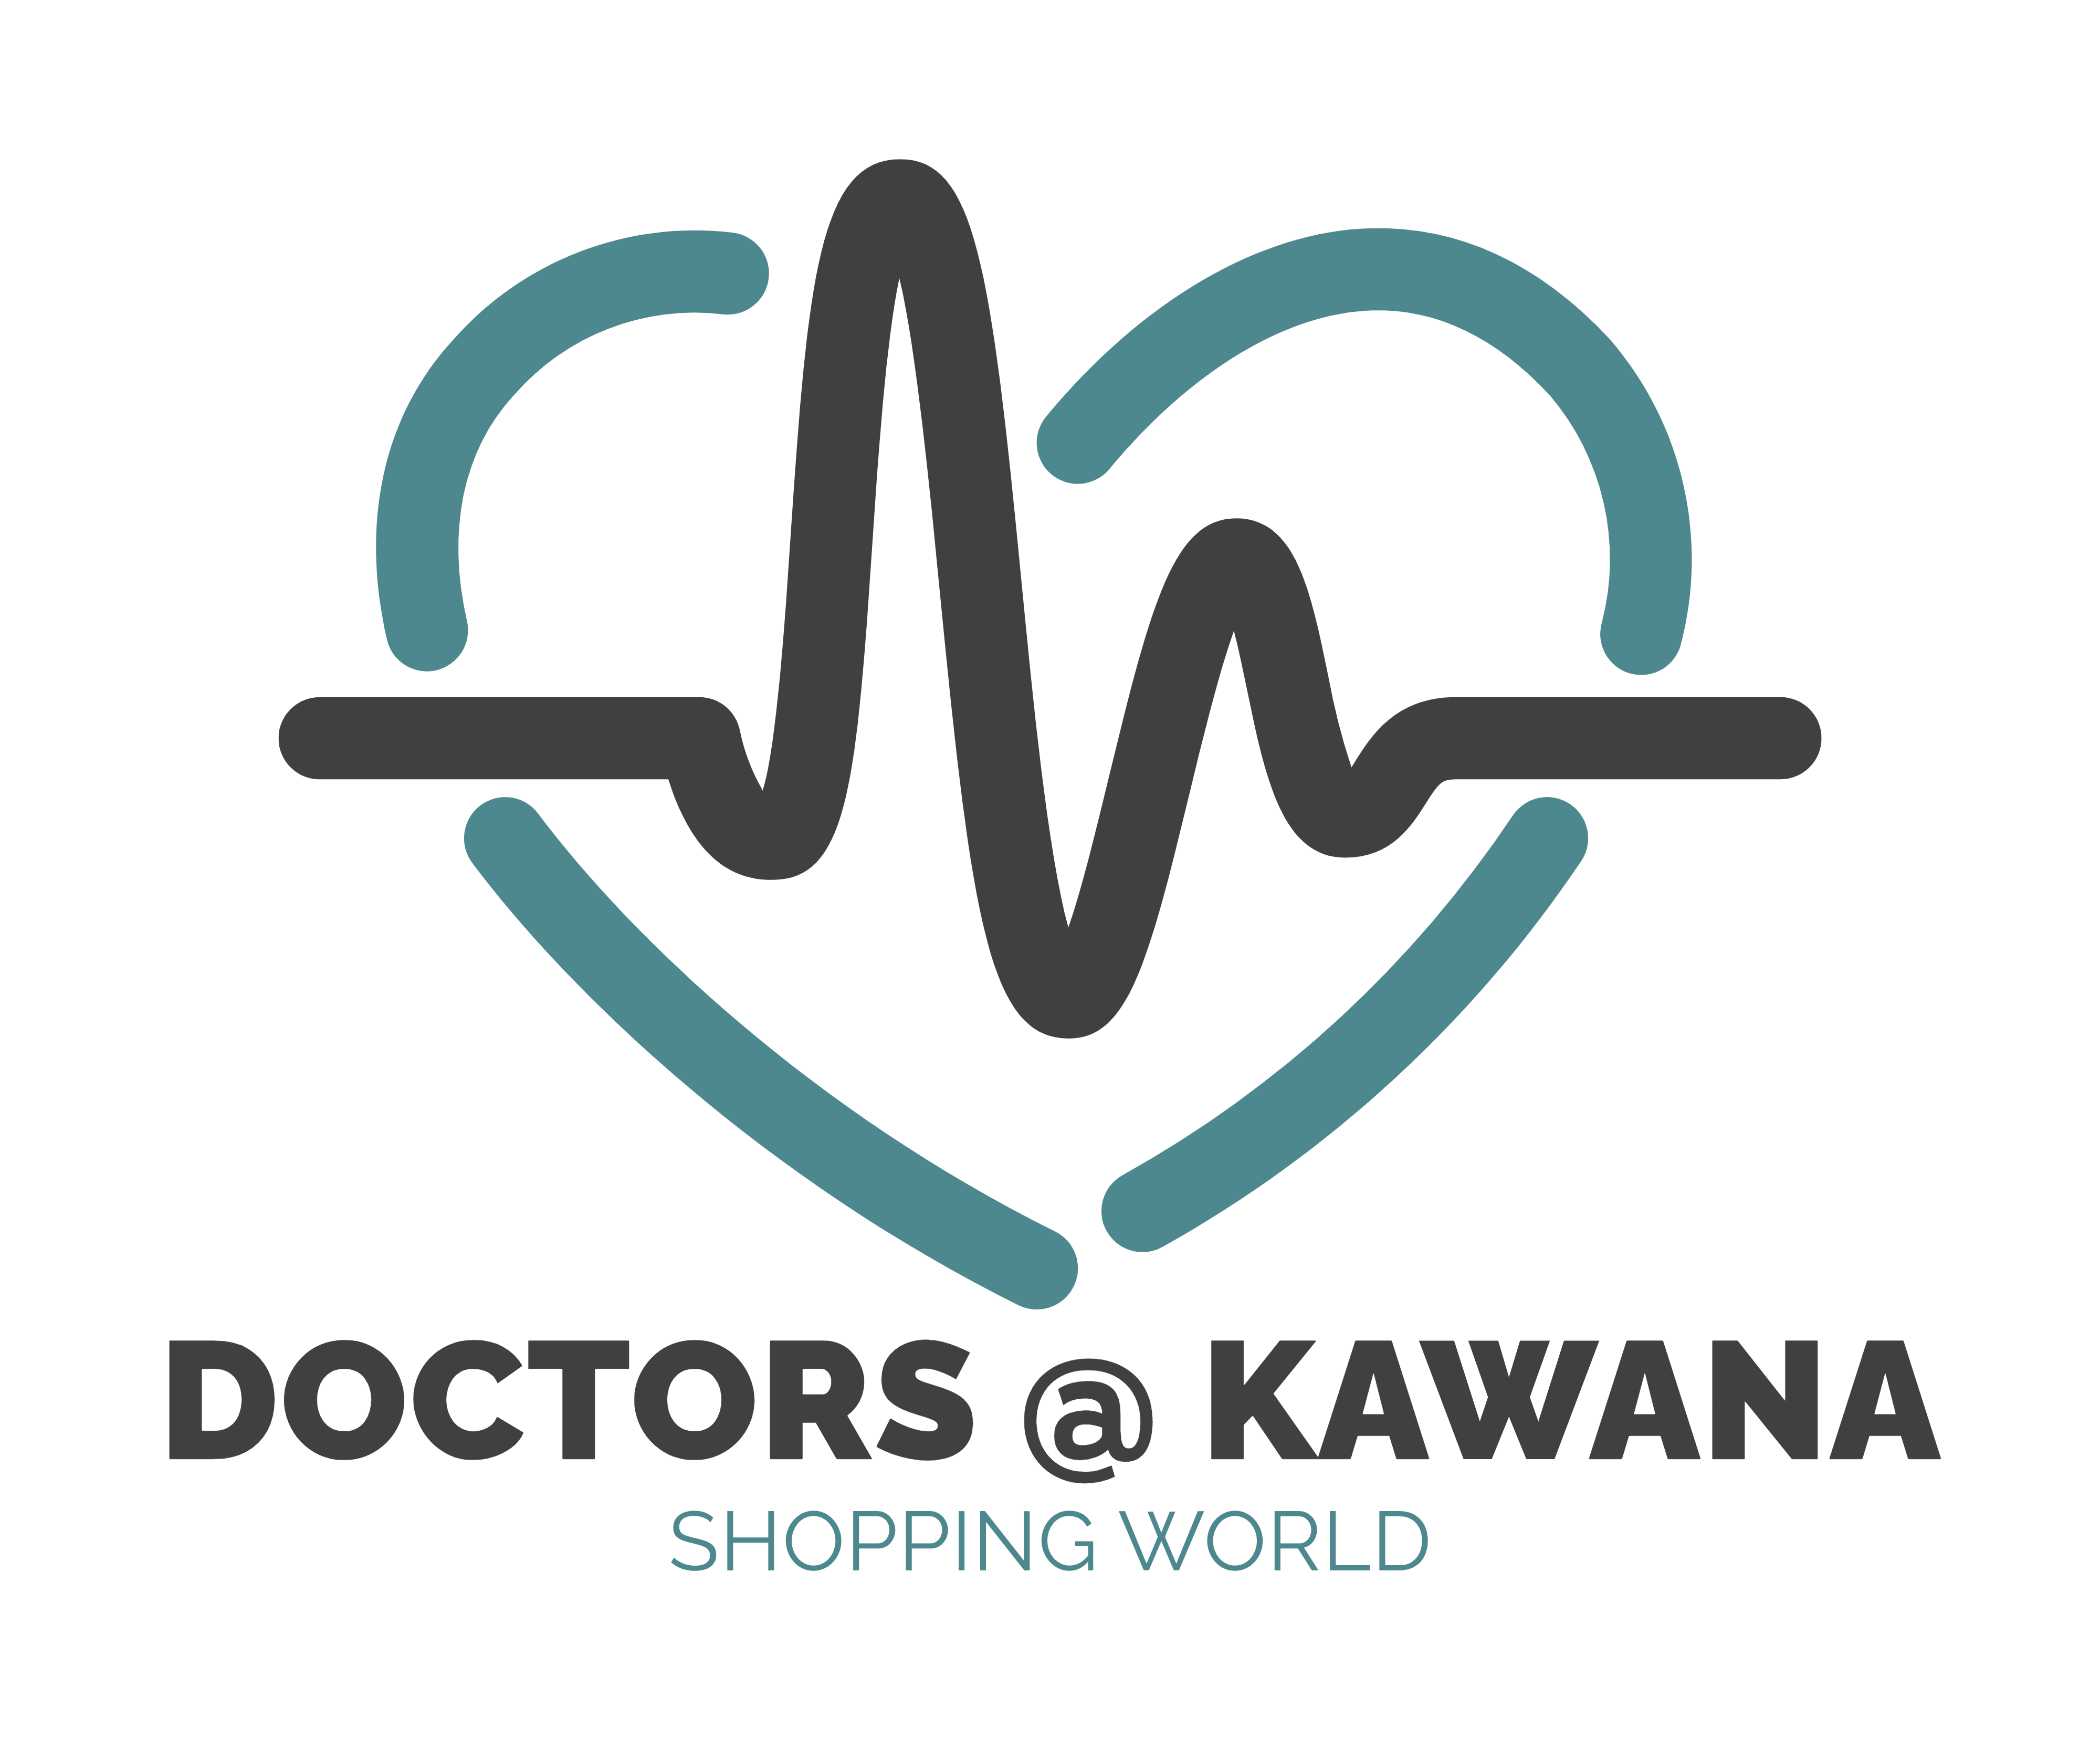 Doctors @ Kawana Shoppingworld